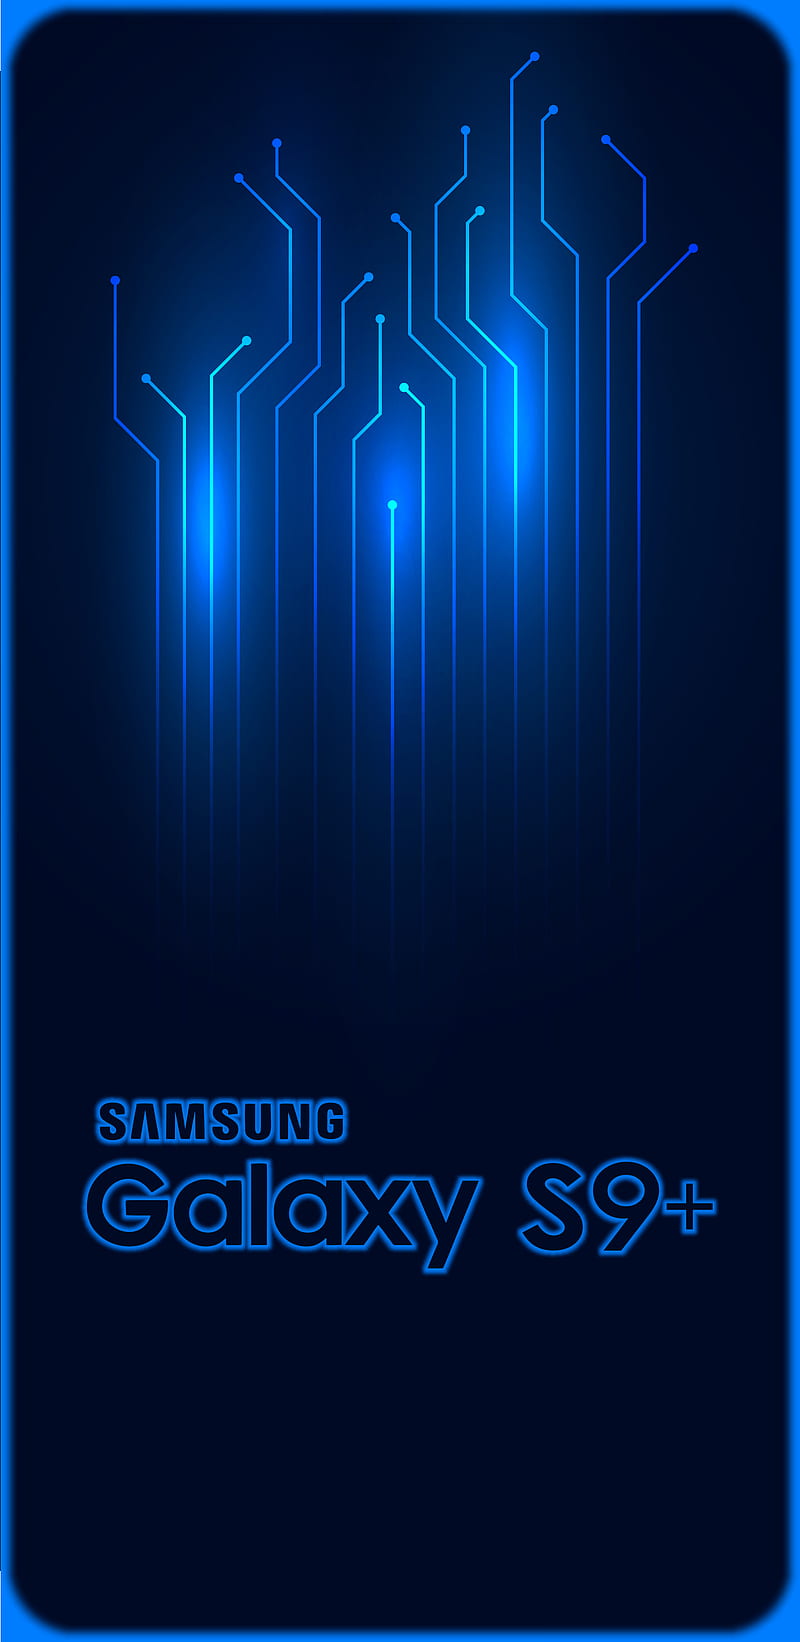 Samsung Galaxy S9+ Wallpapers - Wallpaper Cave